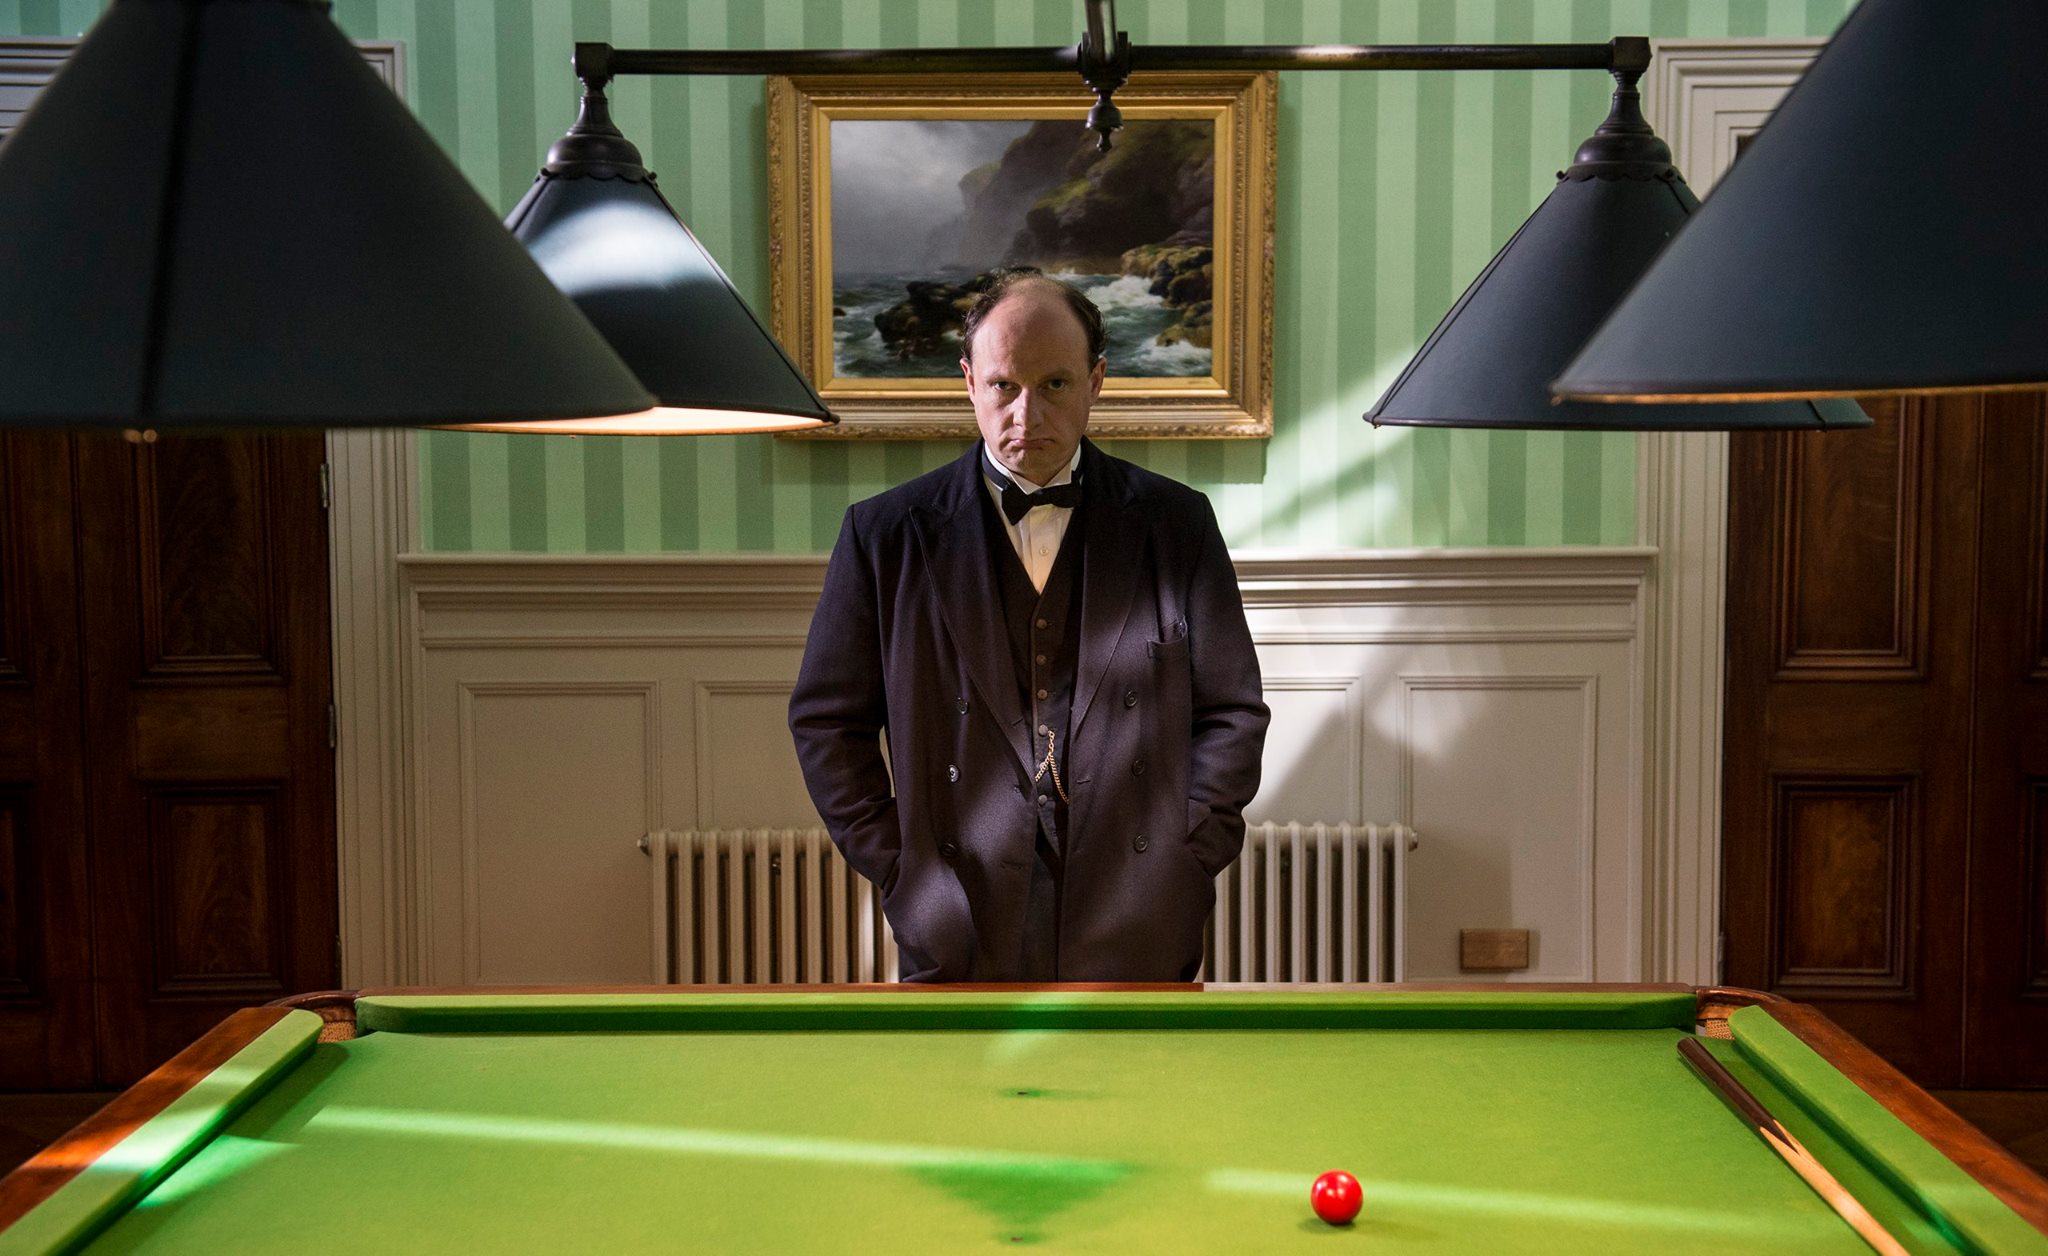 Nicholas Asbury as Winston Churchill in '37 Days' (BBC 2014)